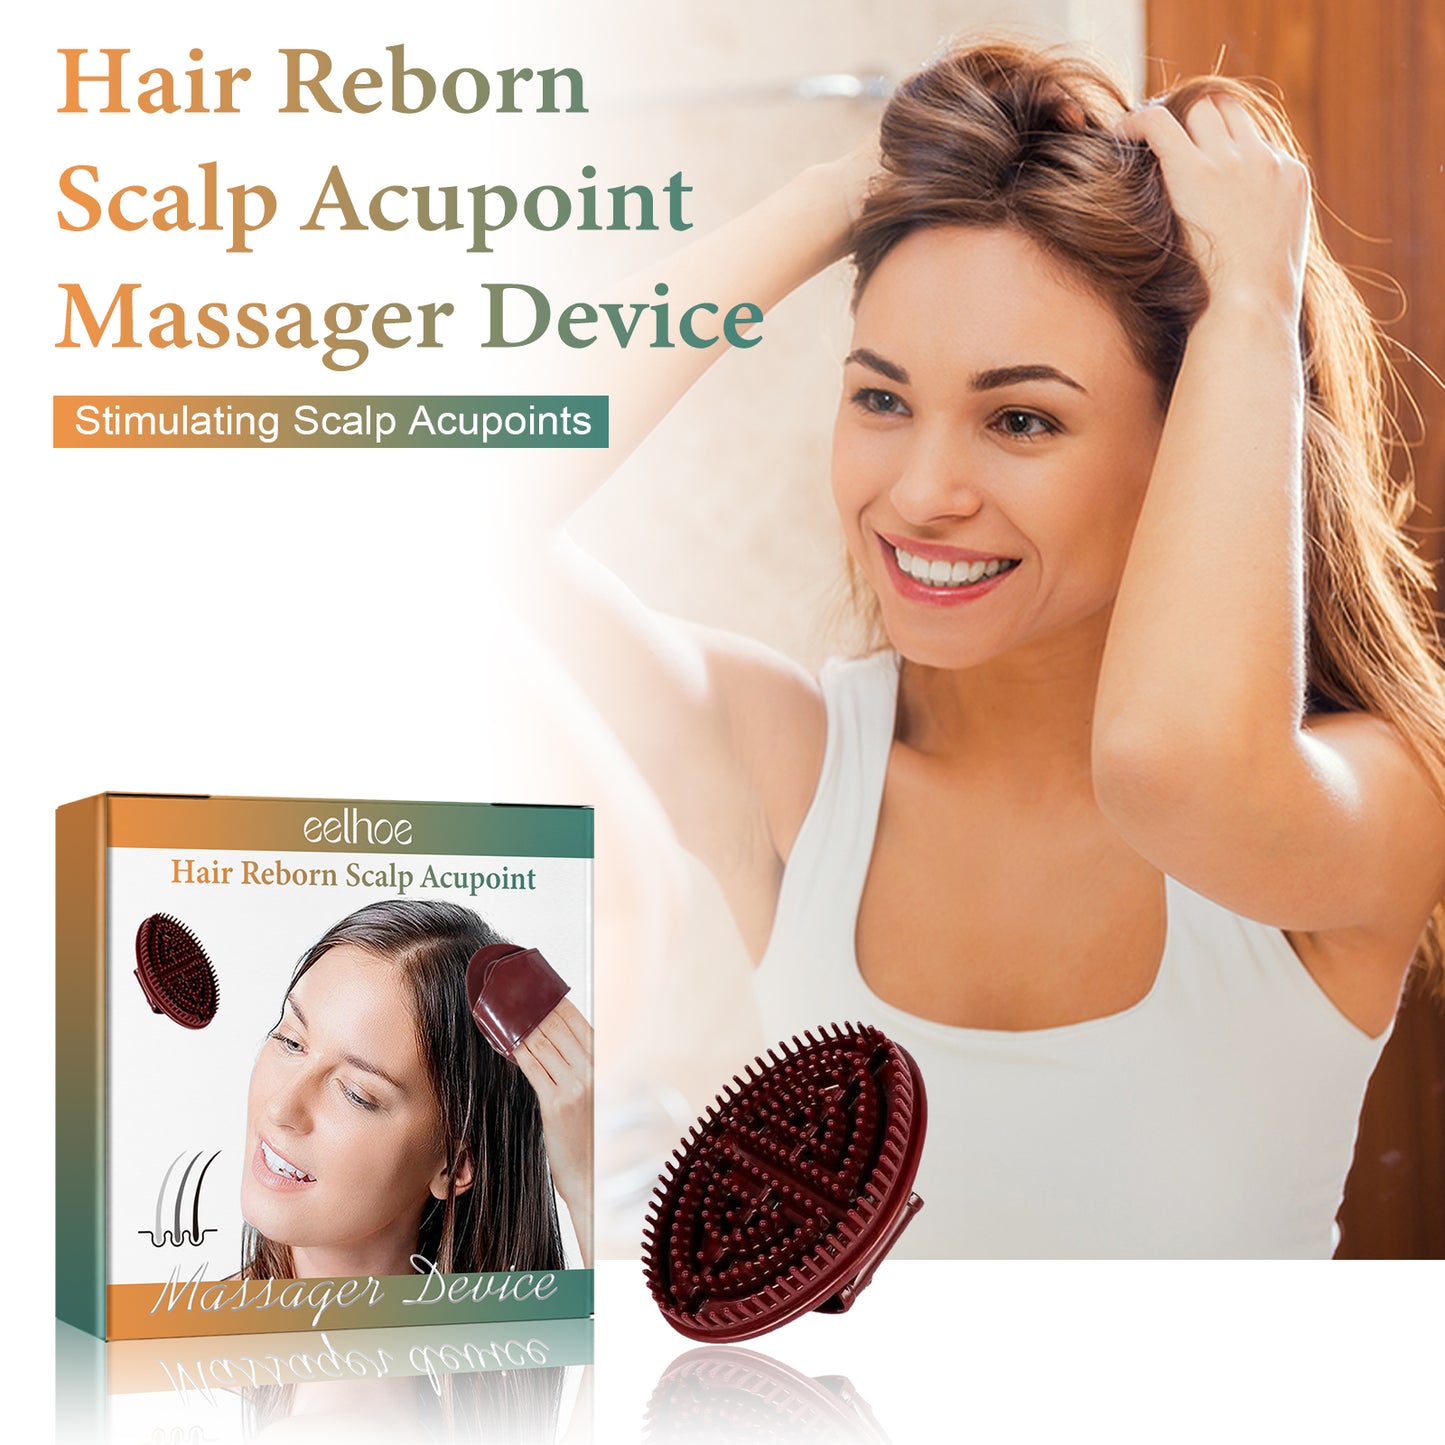 Hair Reborn Scalp Acupoint Massager